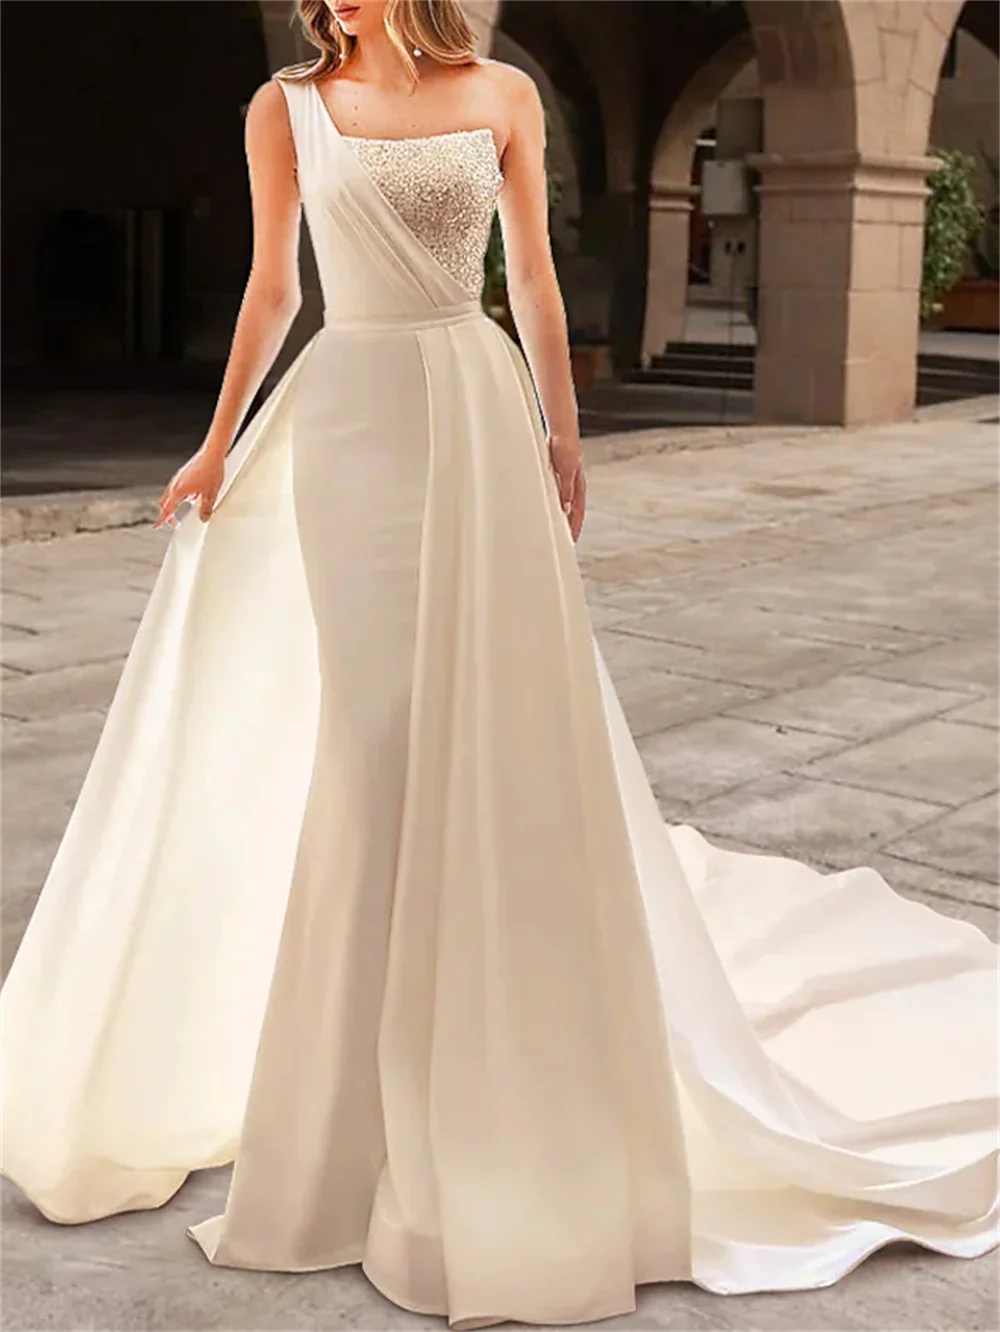 

Sheath / Column Wedding Dresses Jewel Neck Floor Length Tulle Stretch Fabric Long Sleeve Romantic Simple With Pearls 2022 Ladies